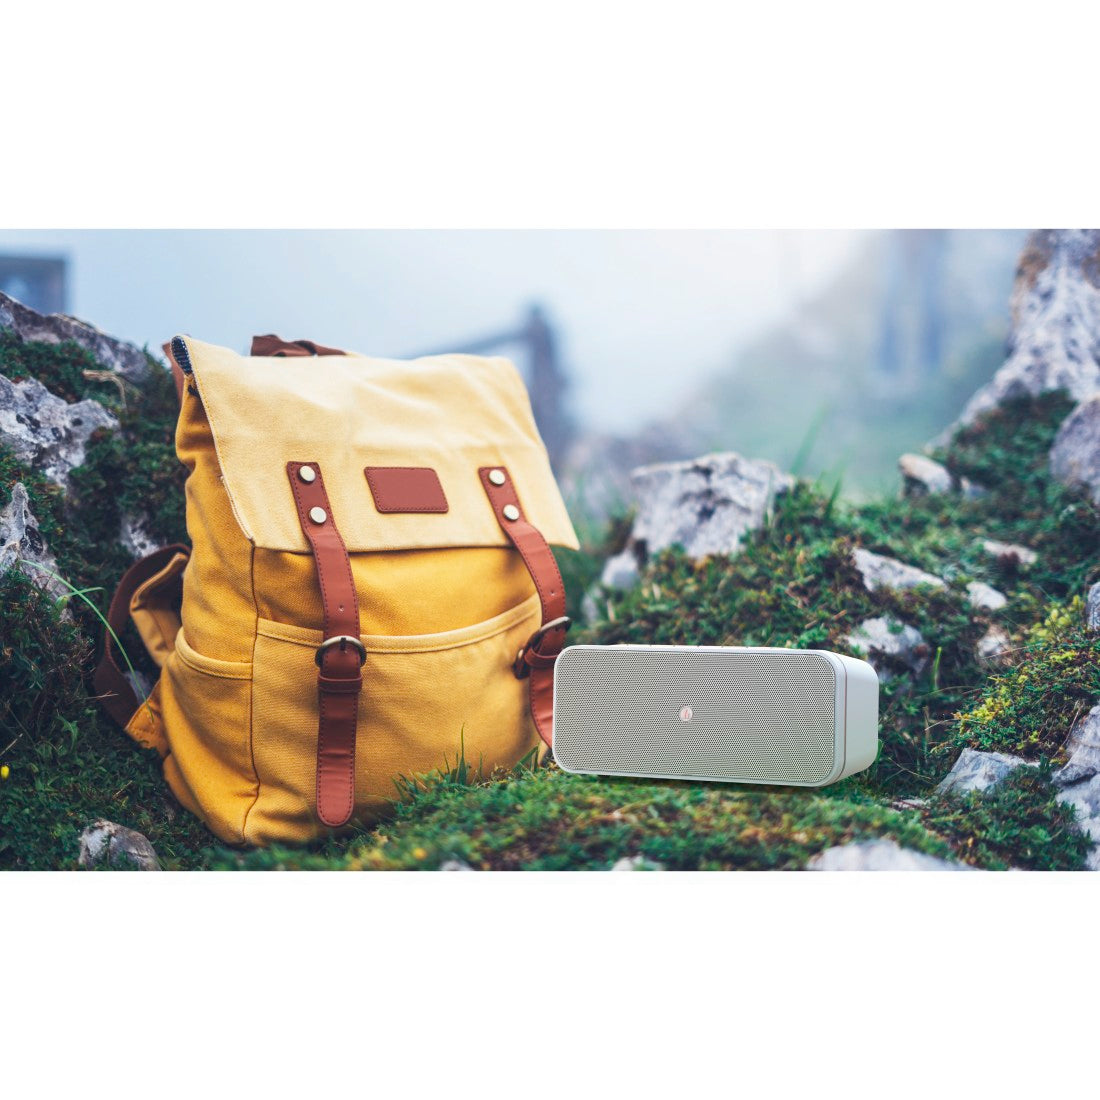 Hama Smart-Speaker "Sirium1000abt", Alexa / Bluetooth®, White